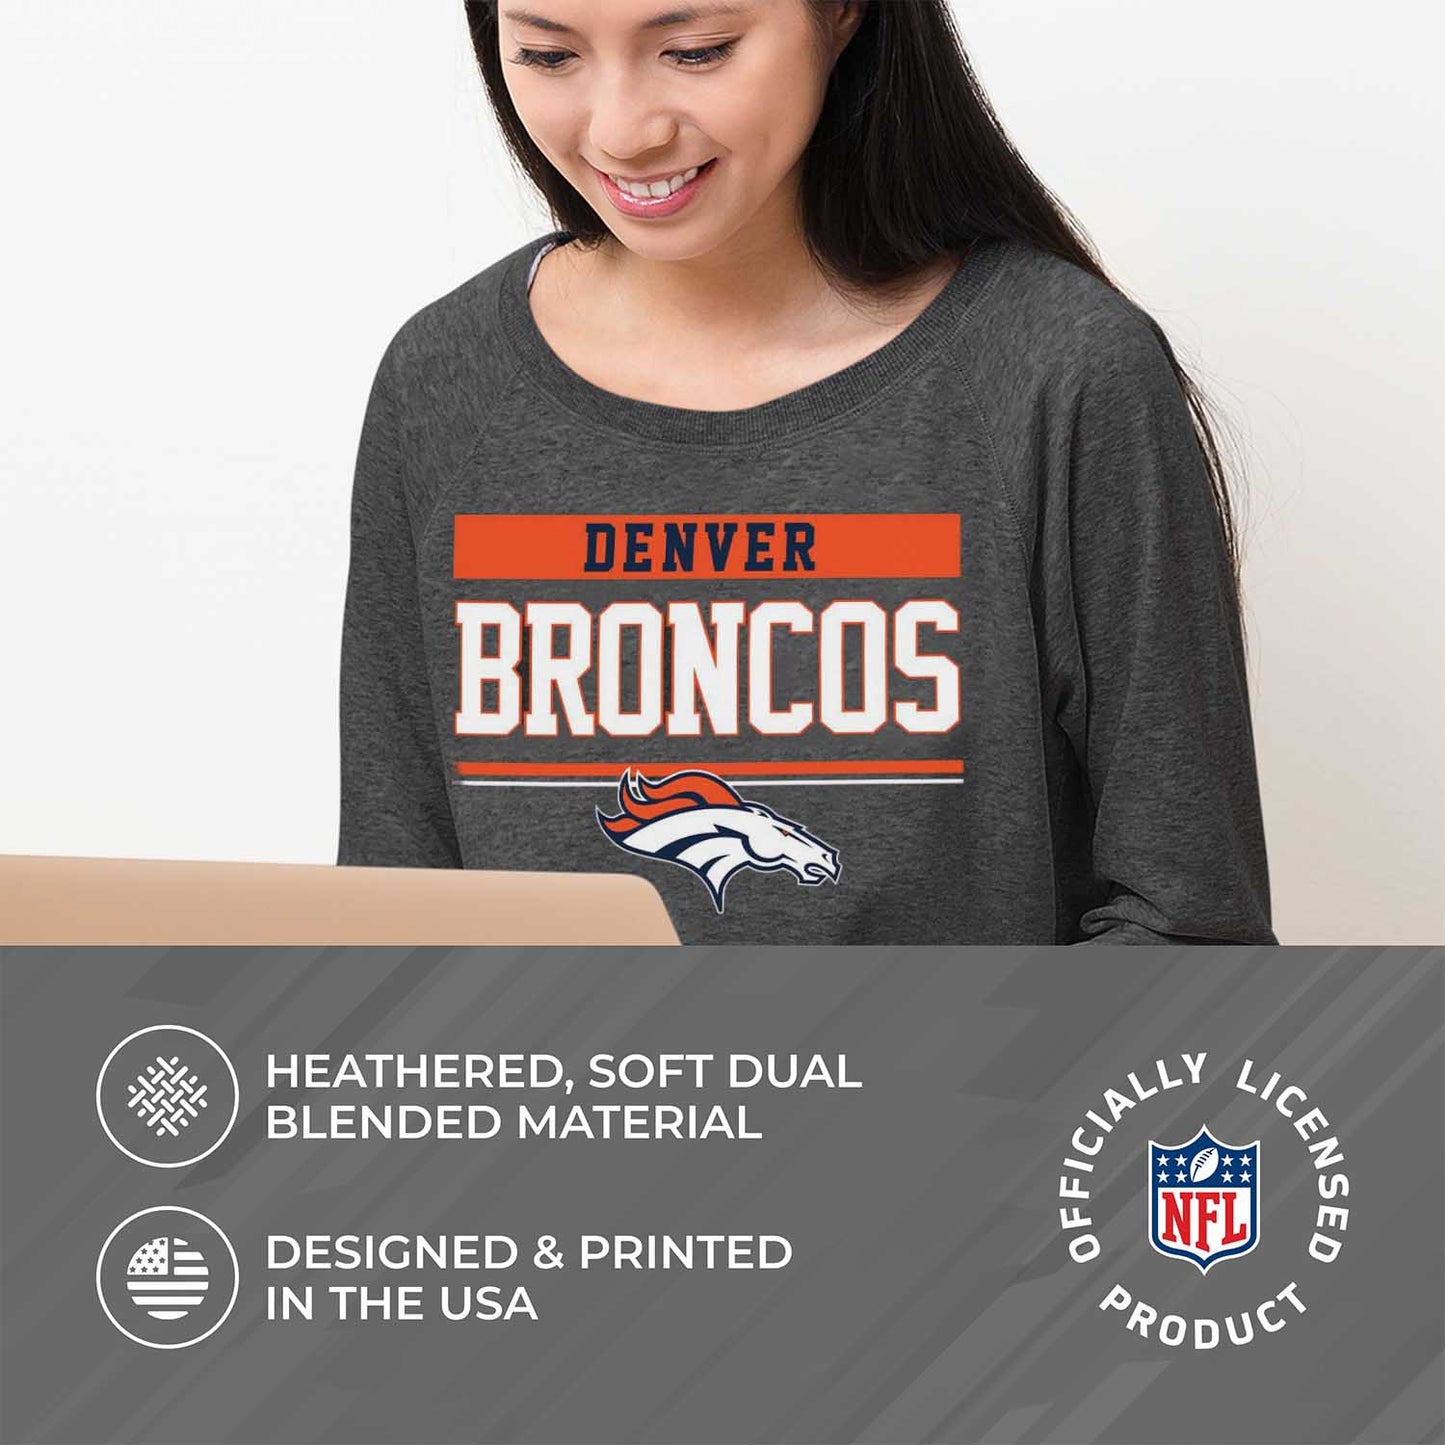 Denver Broncos NFL Womens Charcoal Crew Neck Football Apparel - Charcoal